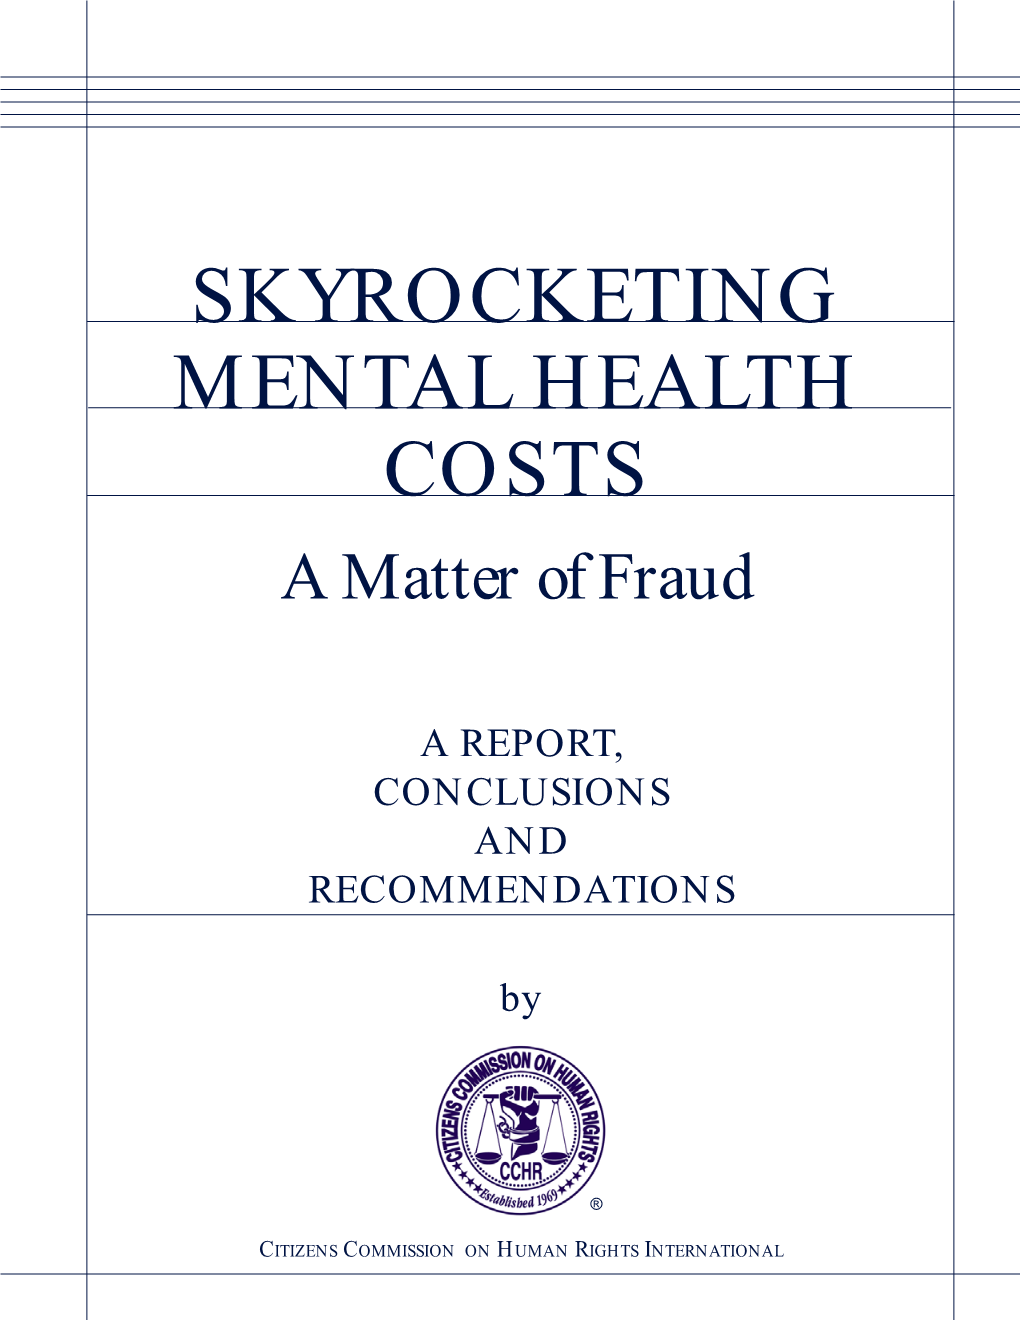 Skyrocketing Mental Health Costs—A Matter of Fraud